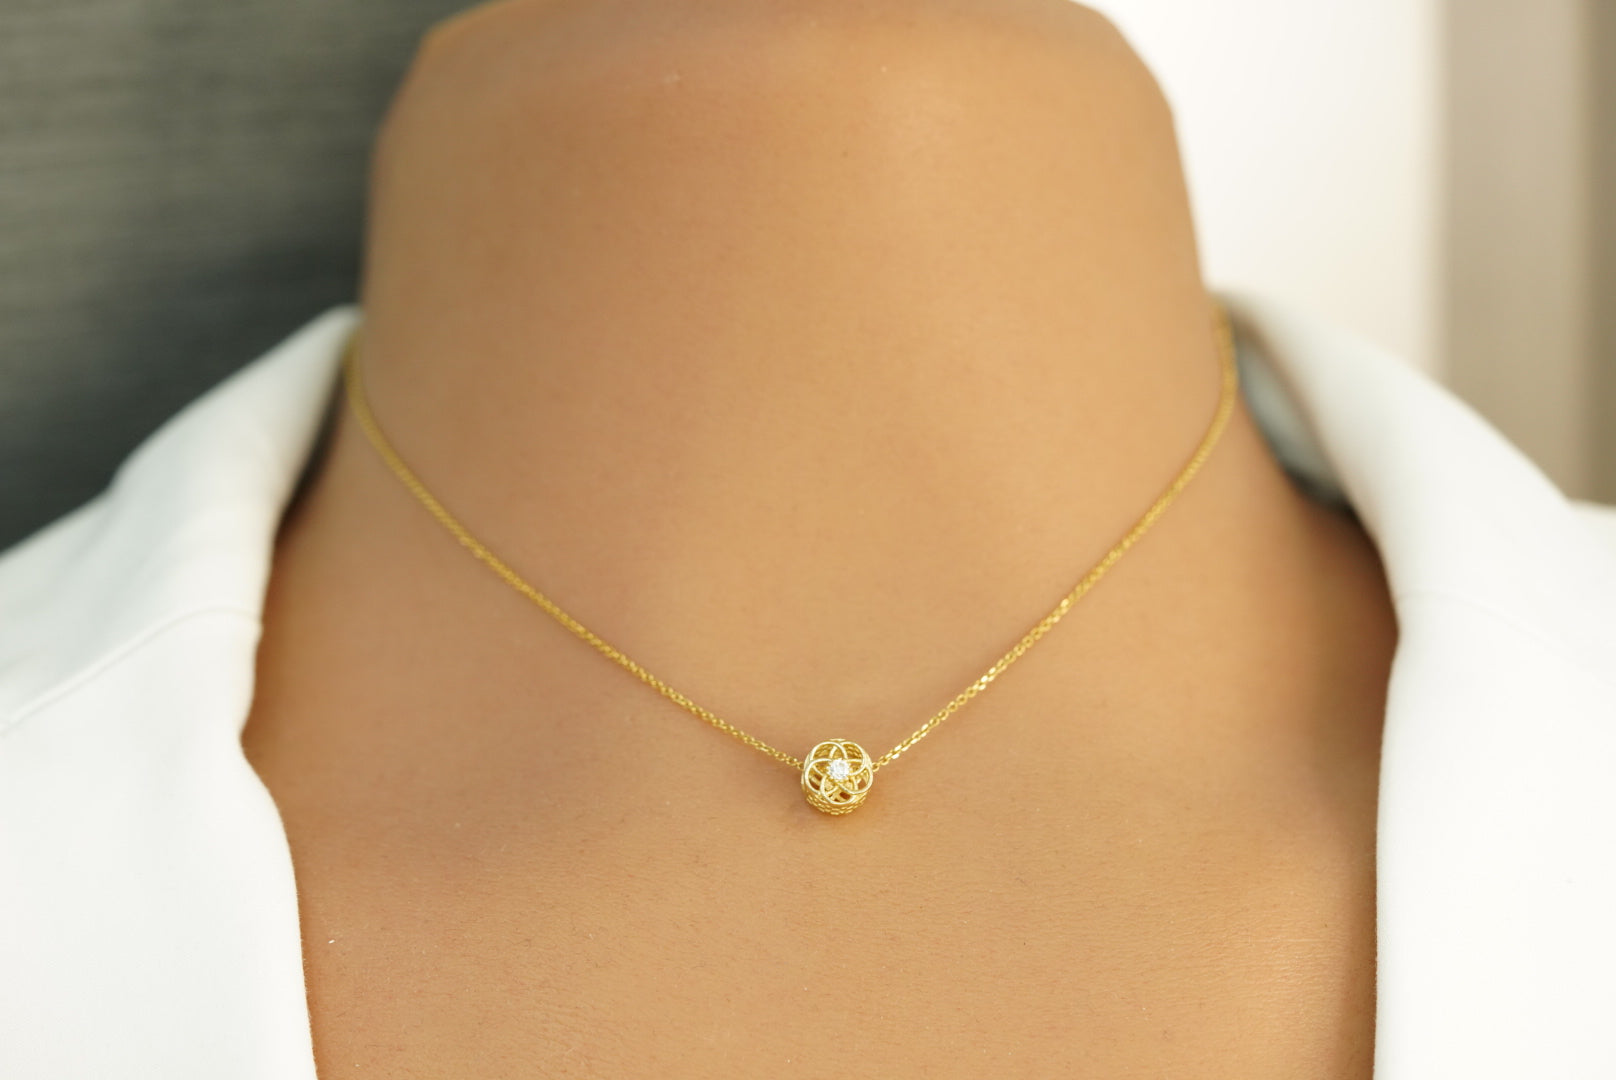 14k Crystal Star Necklace